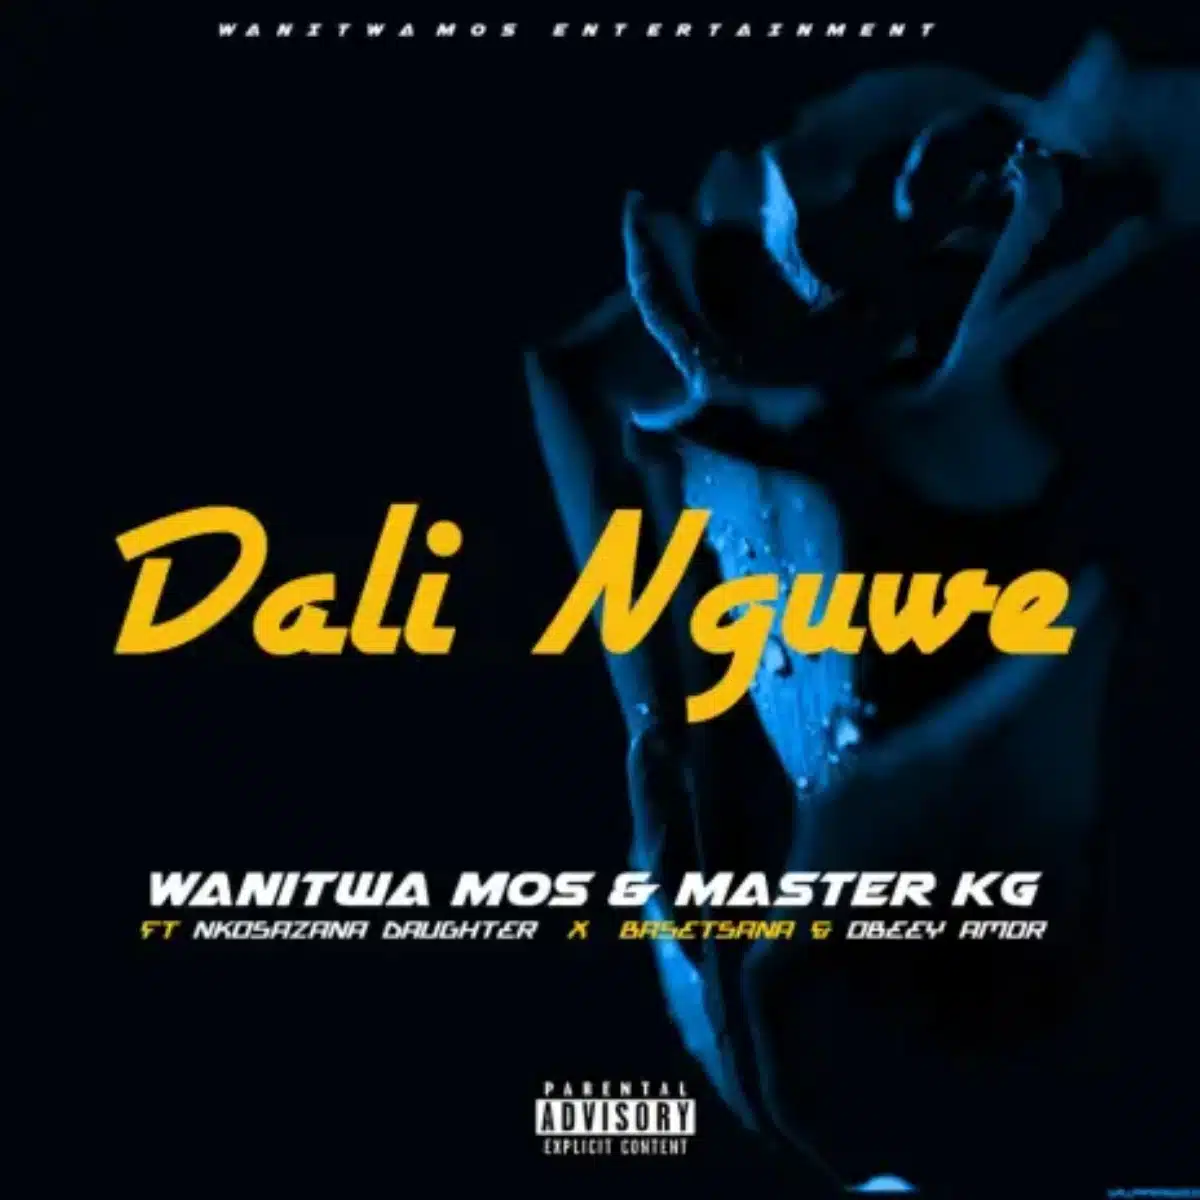 DOWNLOAD: Wanitwa Mos Ft. Master KG X Nkosazana Daughter X Basetsana X Obeey Amor – “Dali Nguwe” Mp3